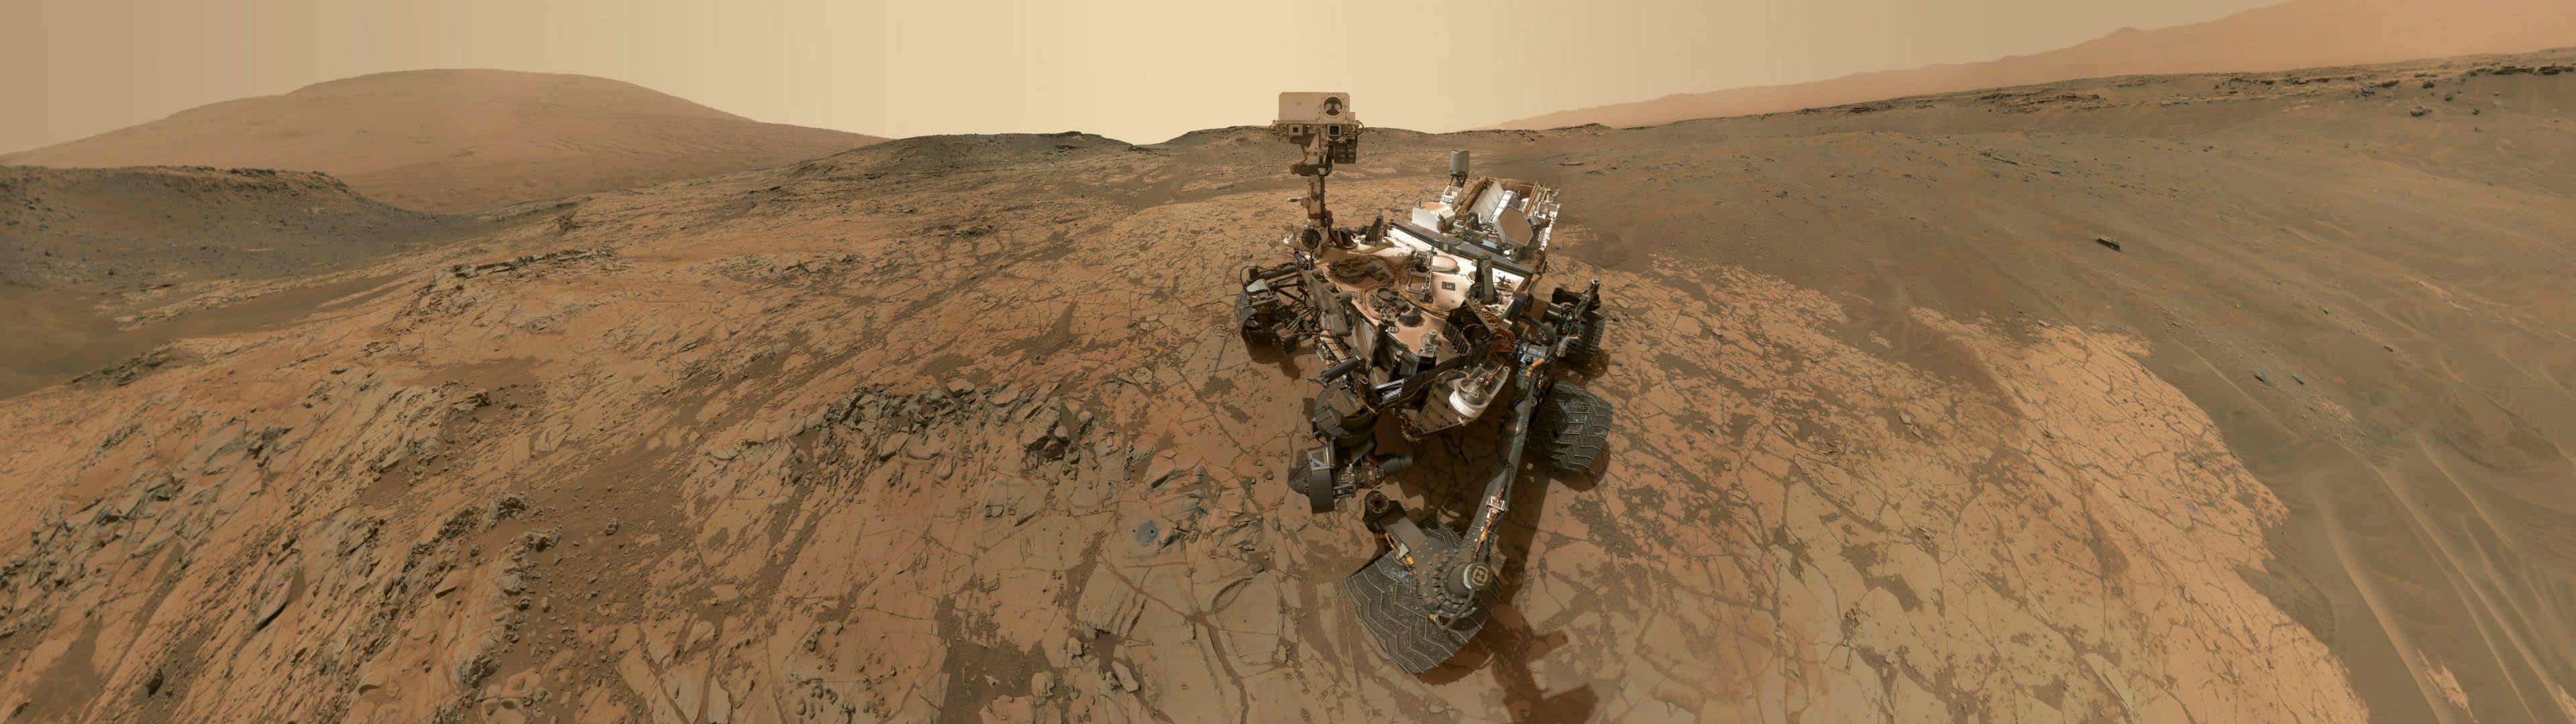 Mars curiosity rover dual monitor wallpaper